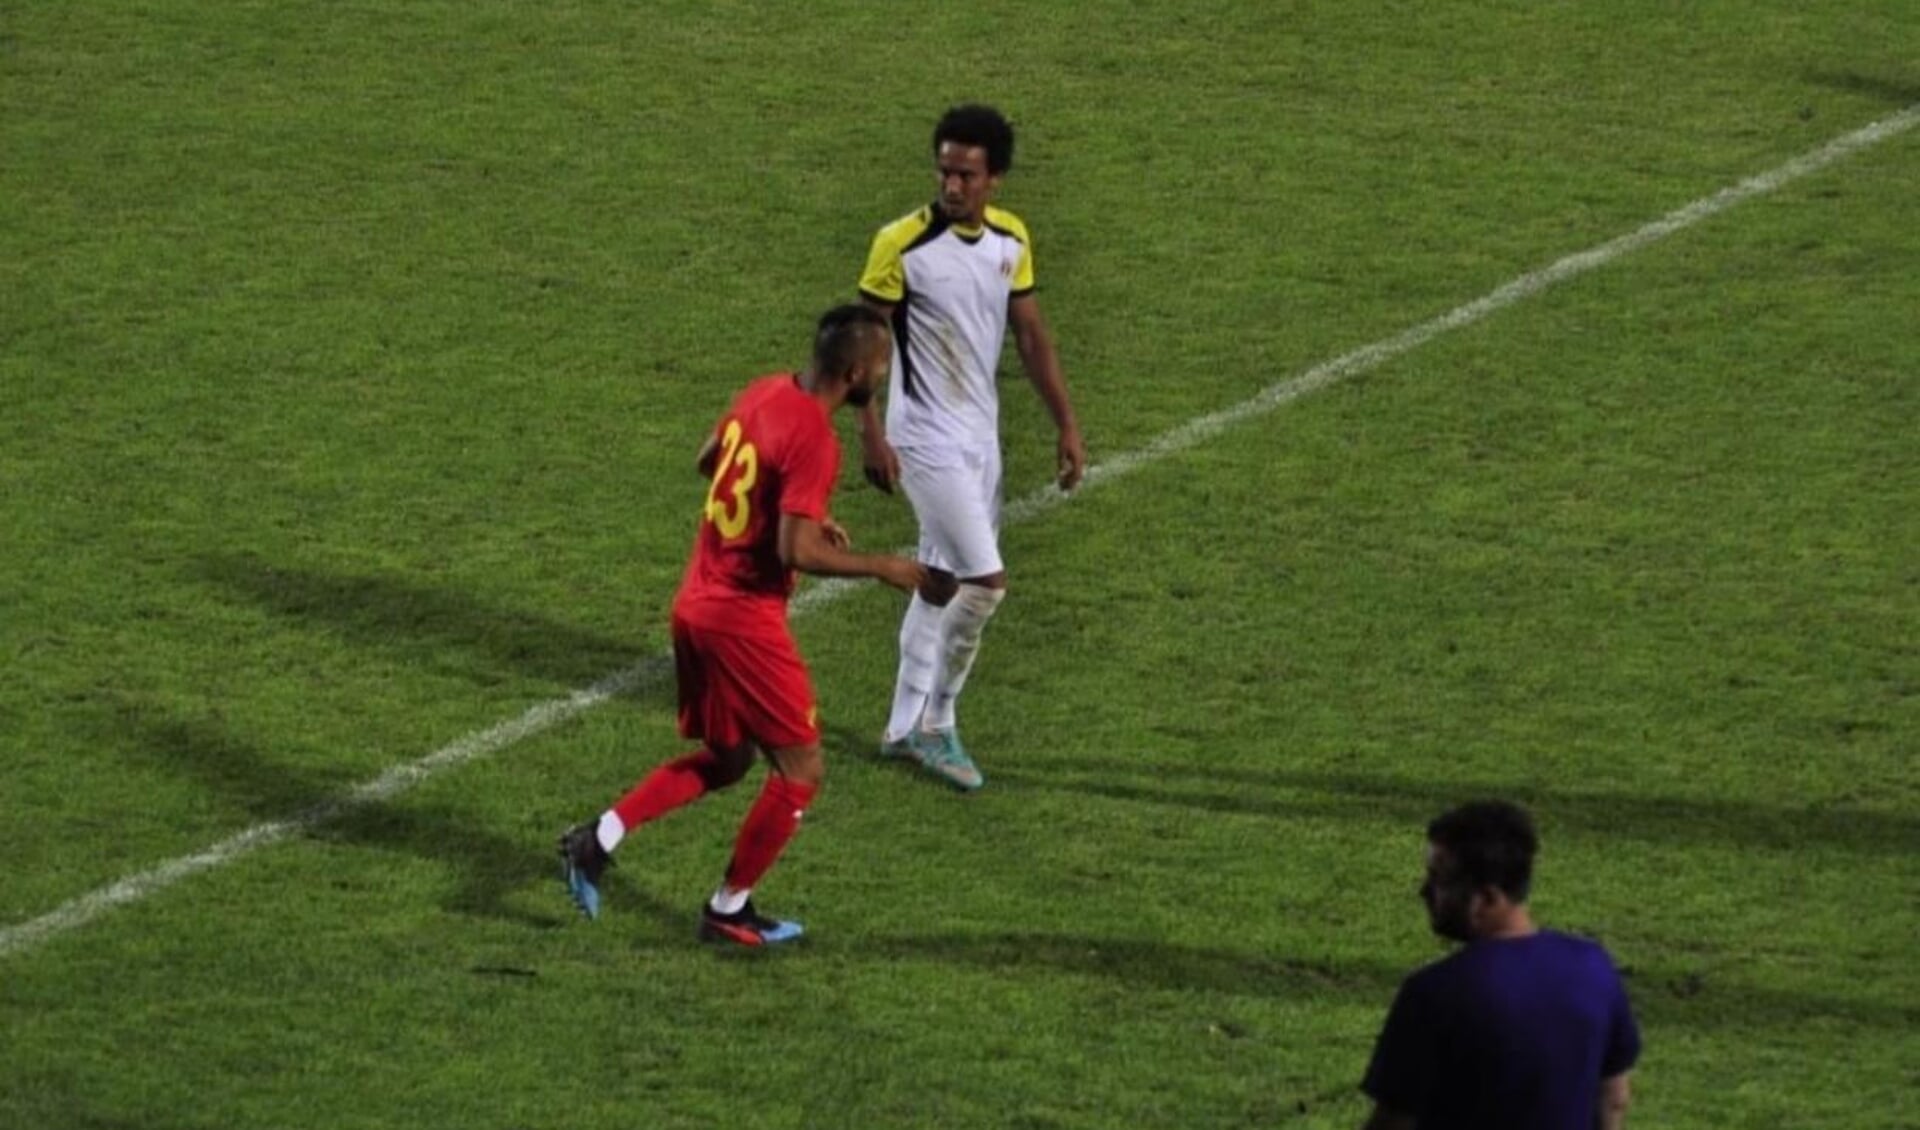 Oefenwedstrijd van Menemenspor tegen Göztepe. Telli in het wit met naast hem voormalig Galatasary-speler Yasin Öztekin.